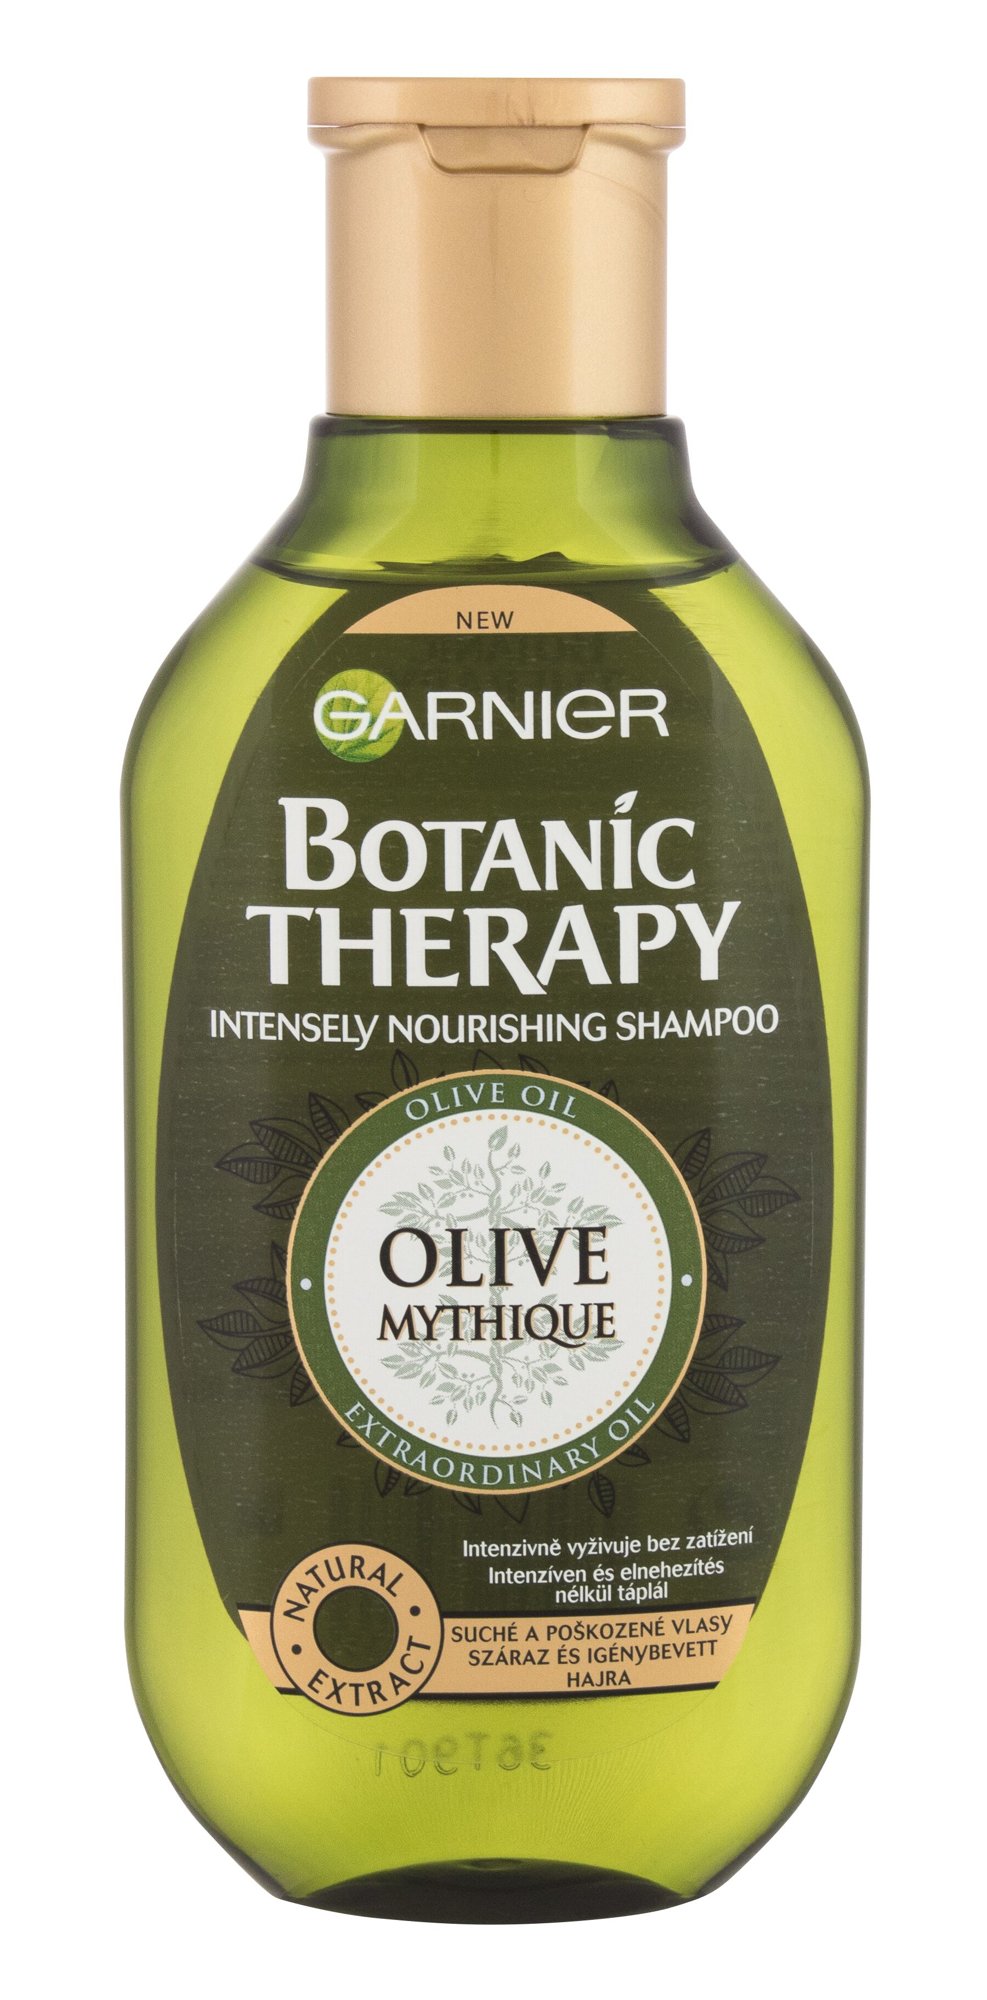 Garnier Botanic Therapy Olive Mythique šampūnas